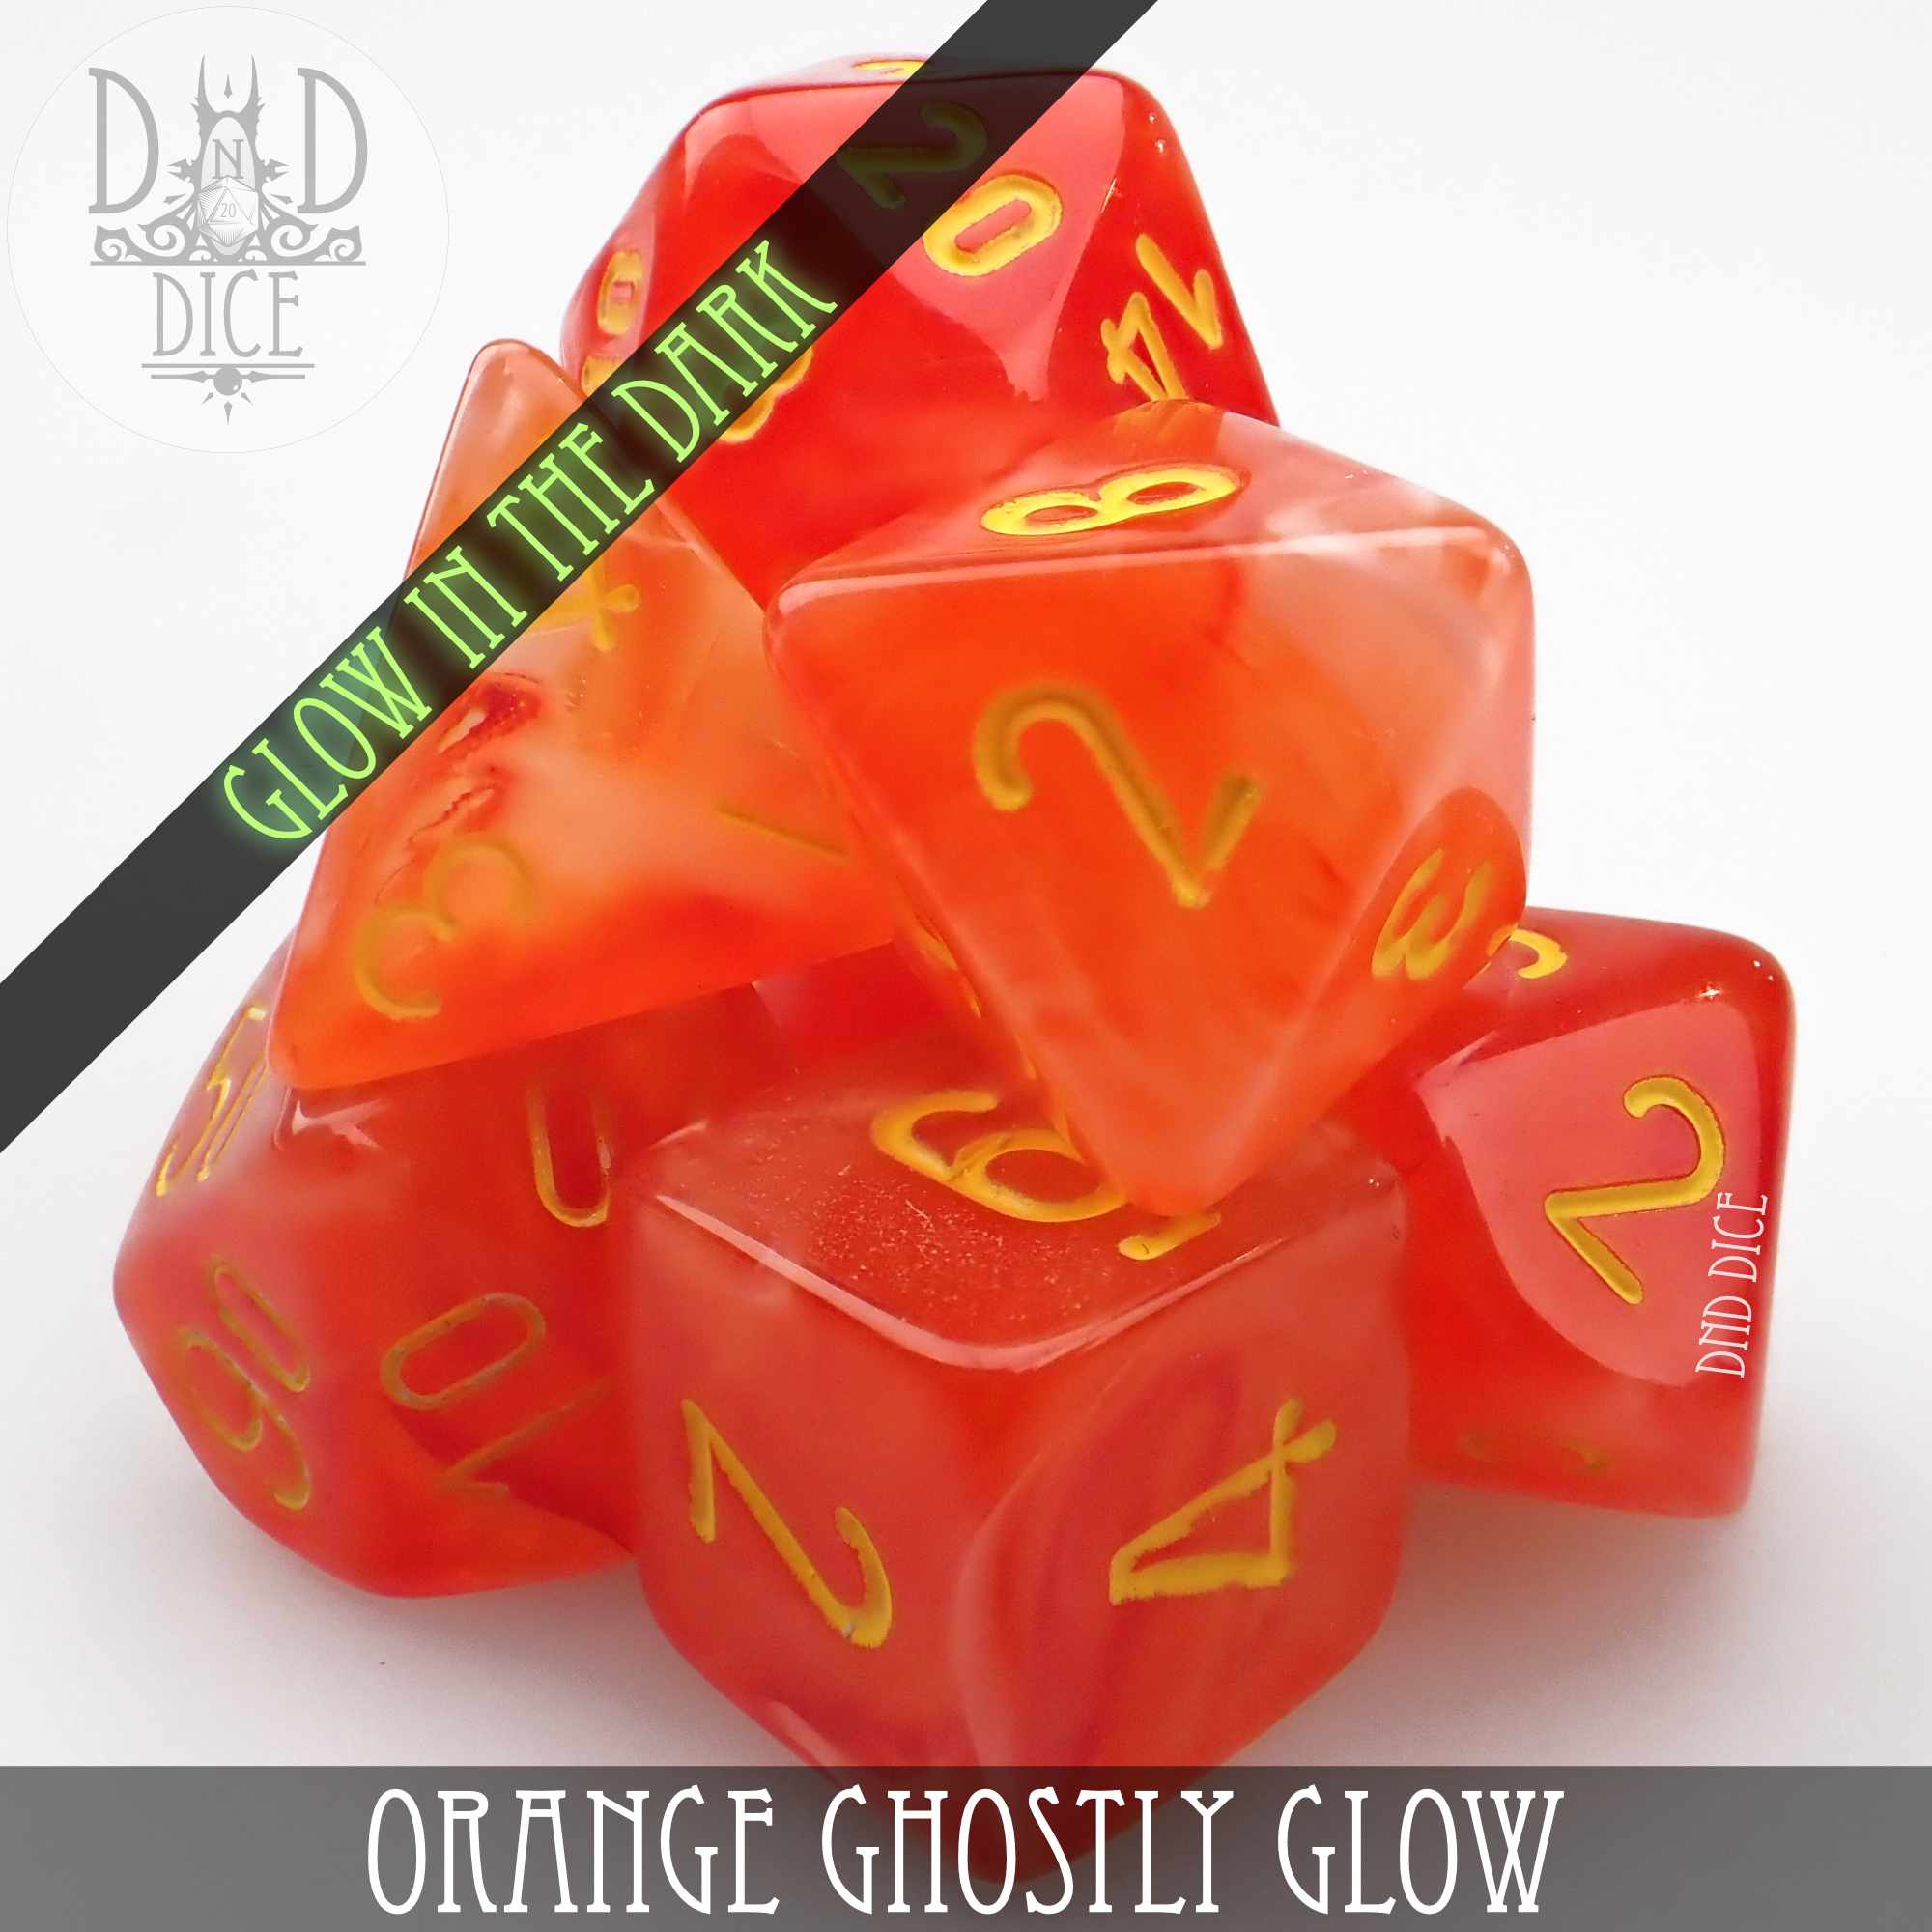 Orange Ghostly Glow in the Dark Dice Set